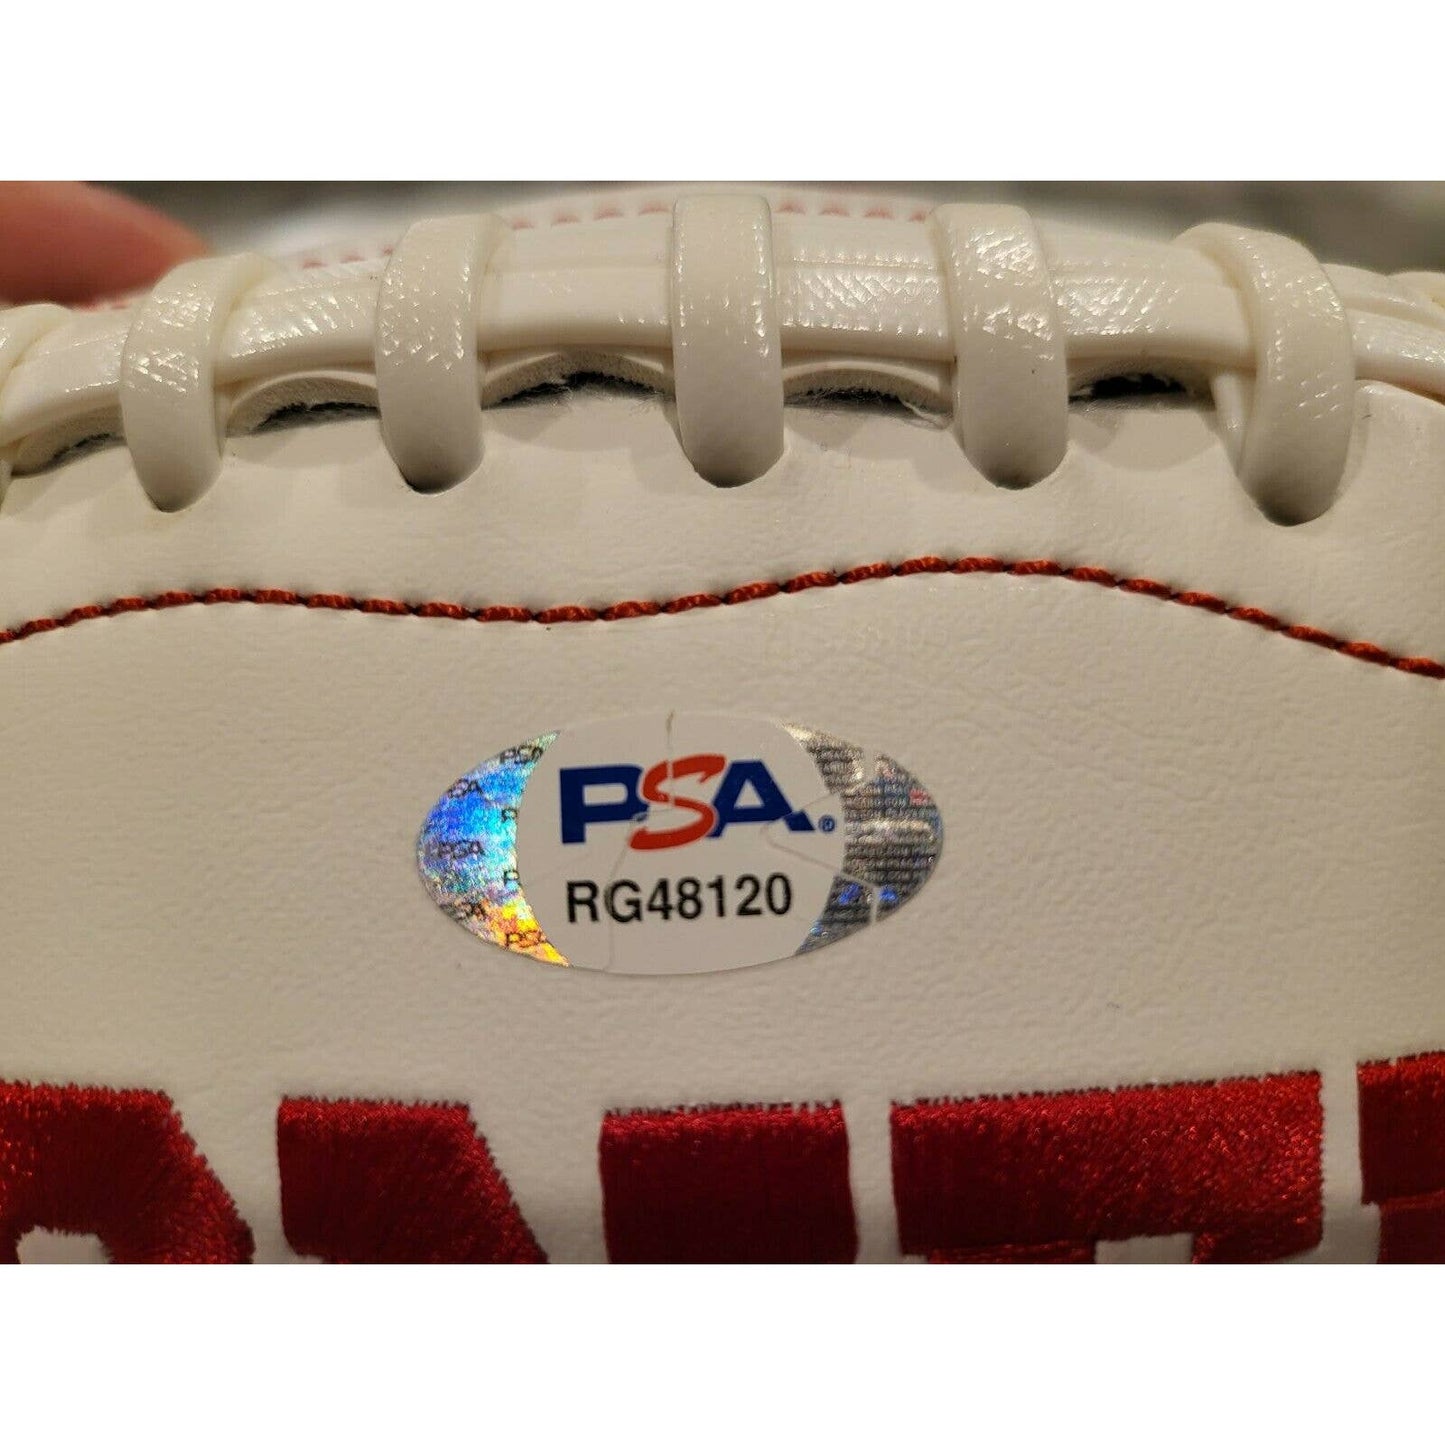 Spencer Rattler Autographed/Signed Football PSA/DNA Sticker Oklahoma Sooners - TreasuresEvolved